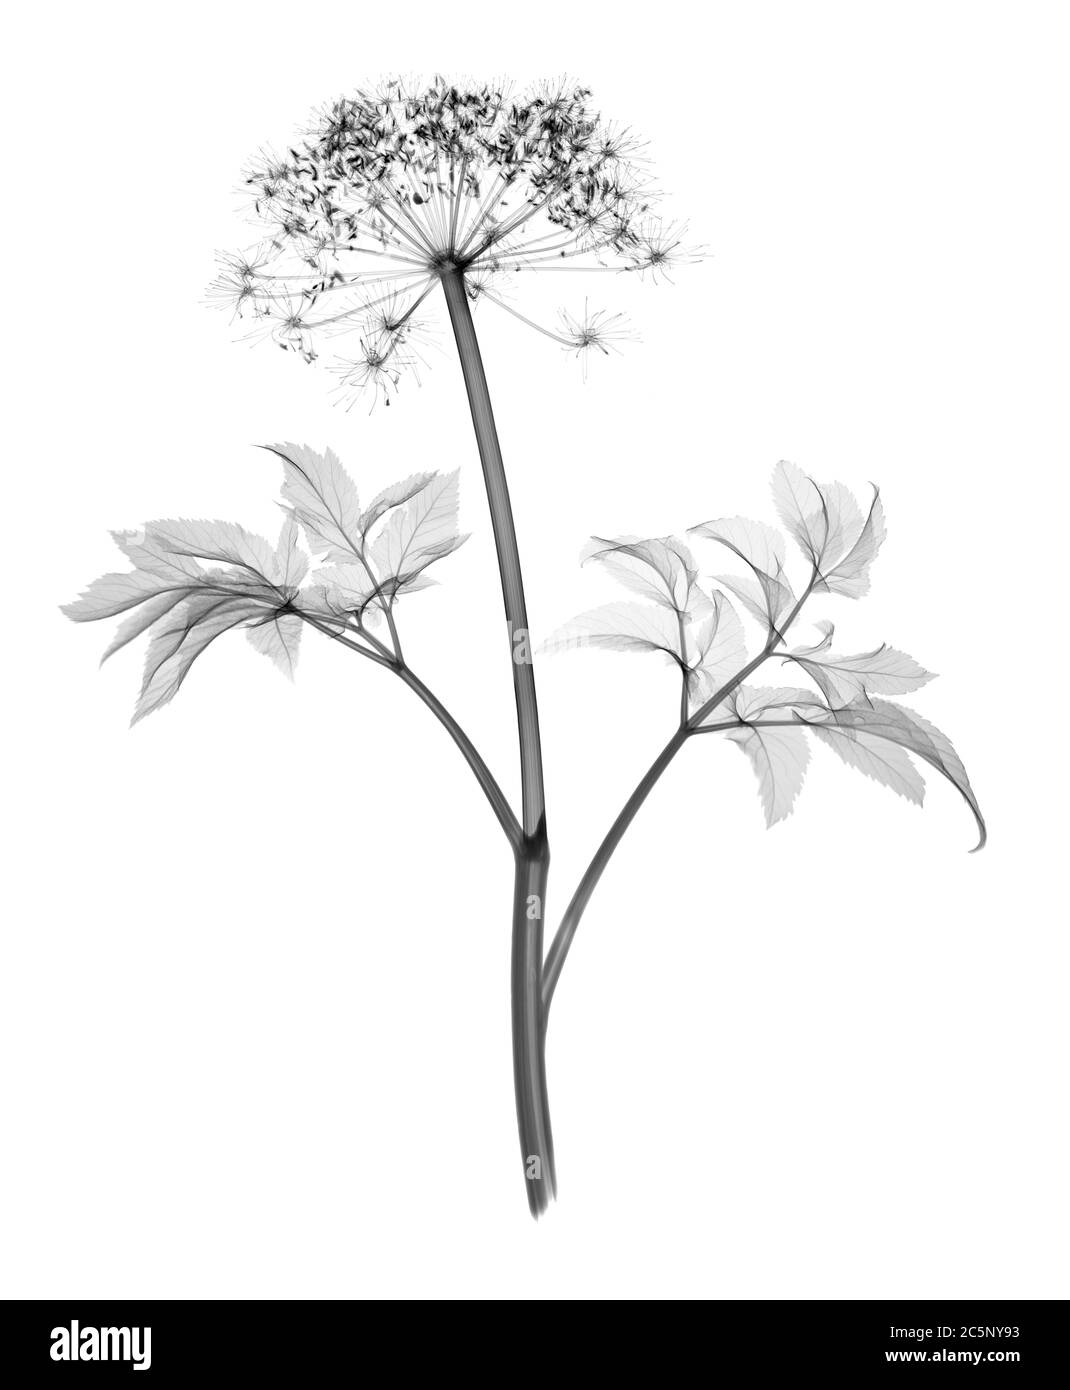 Angelica stem, X-ray. Stock Photo